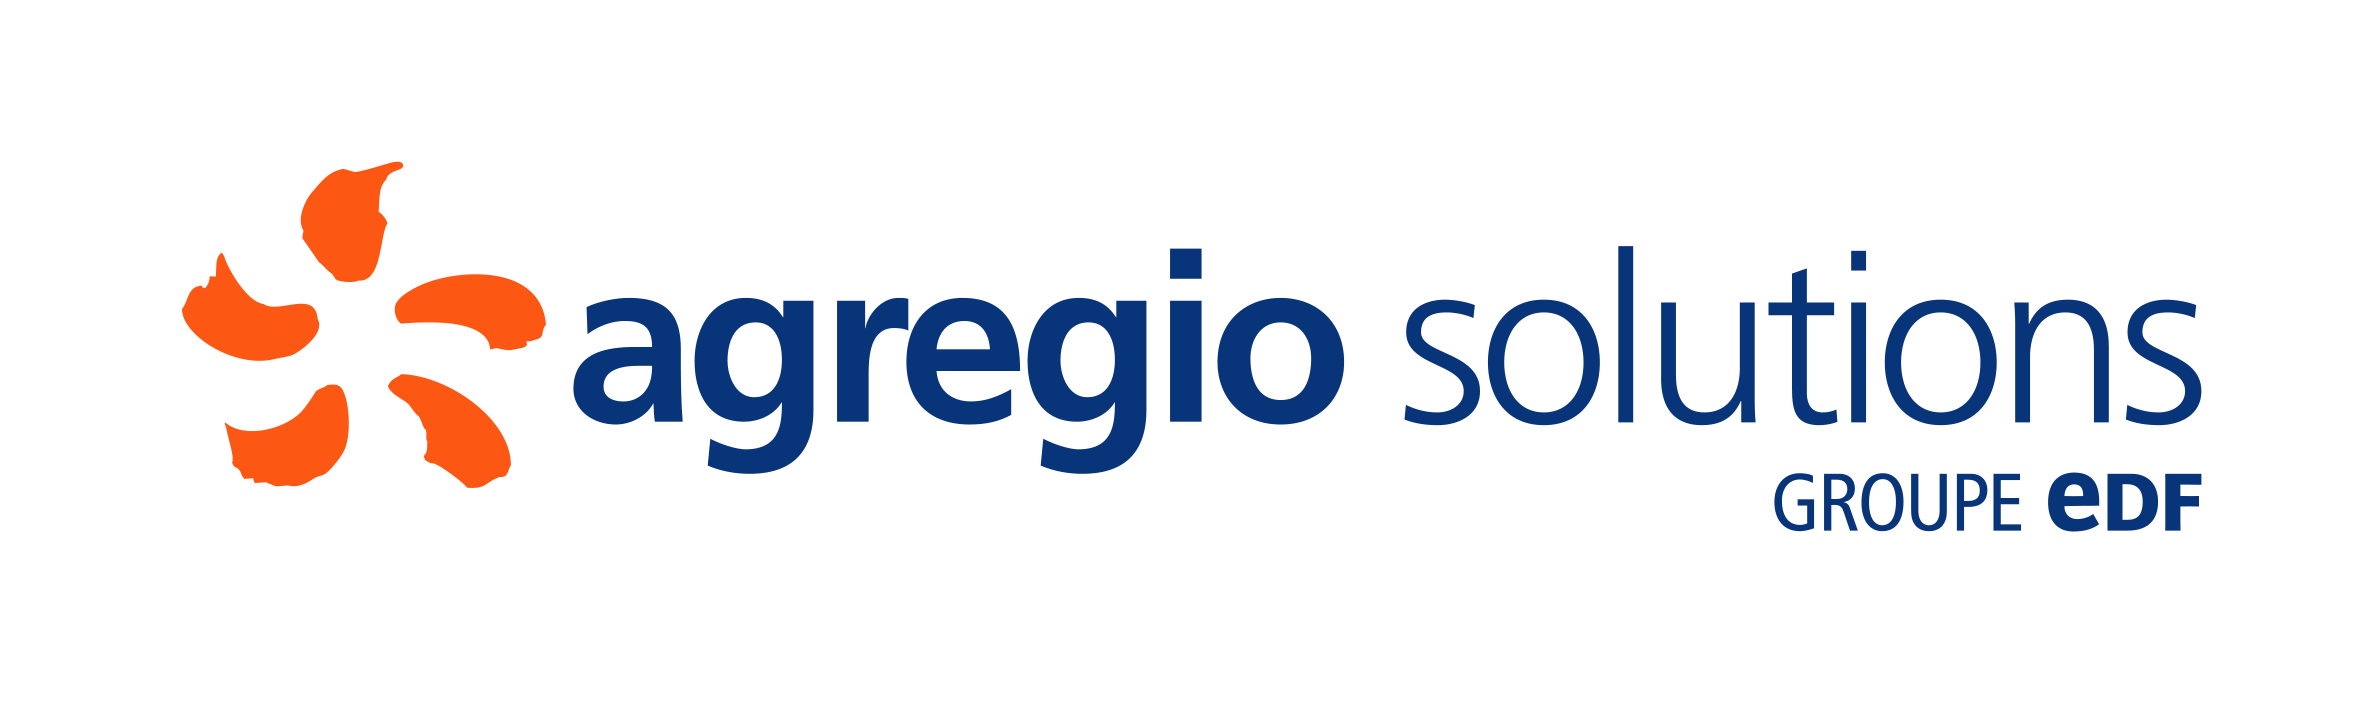 EDF Agregio Solutions Logo